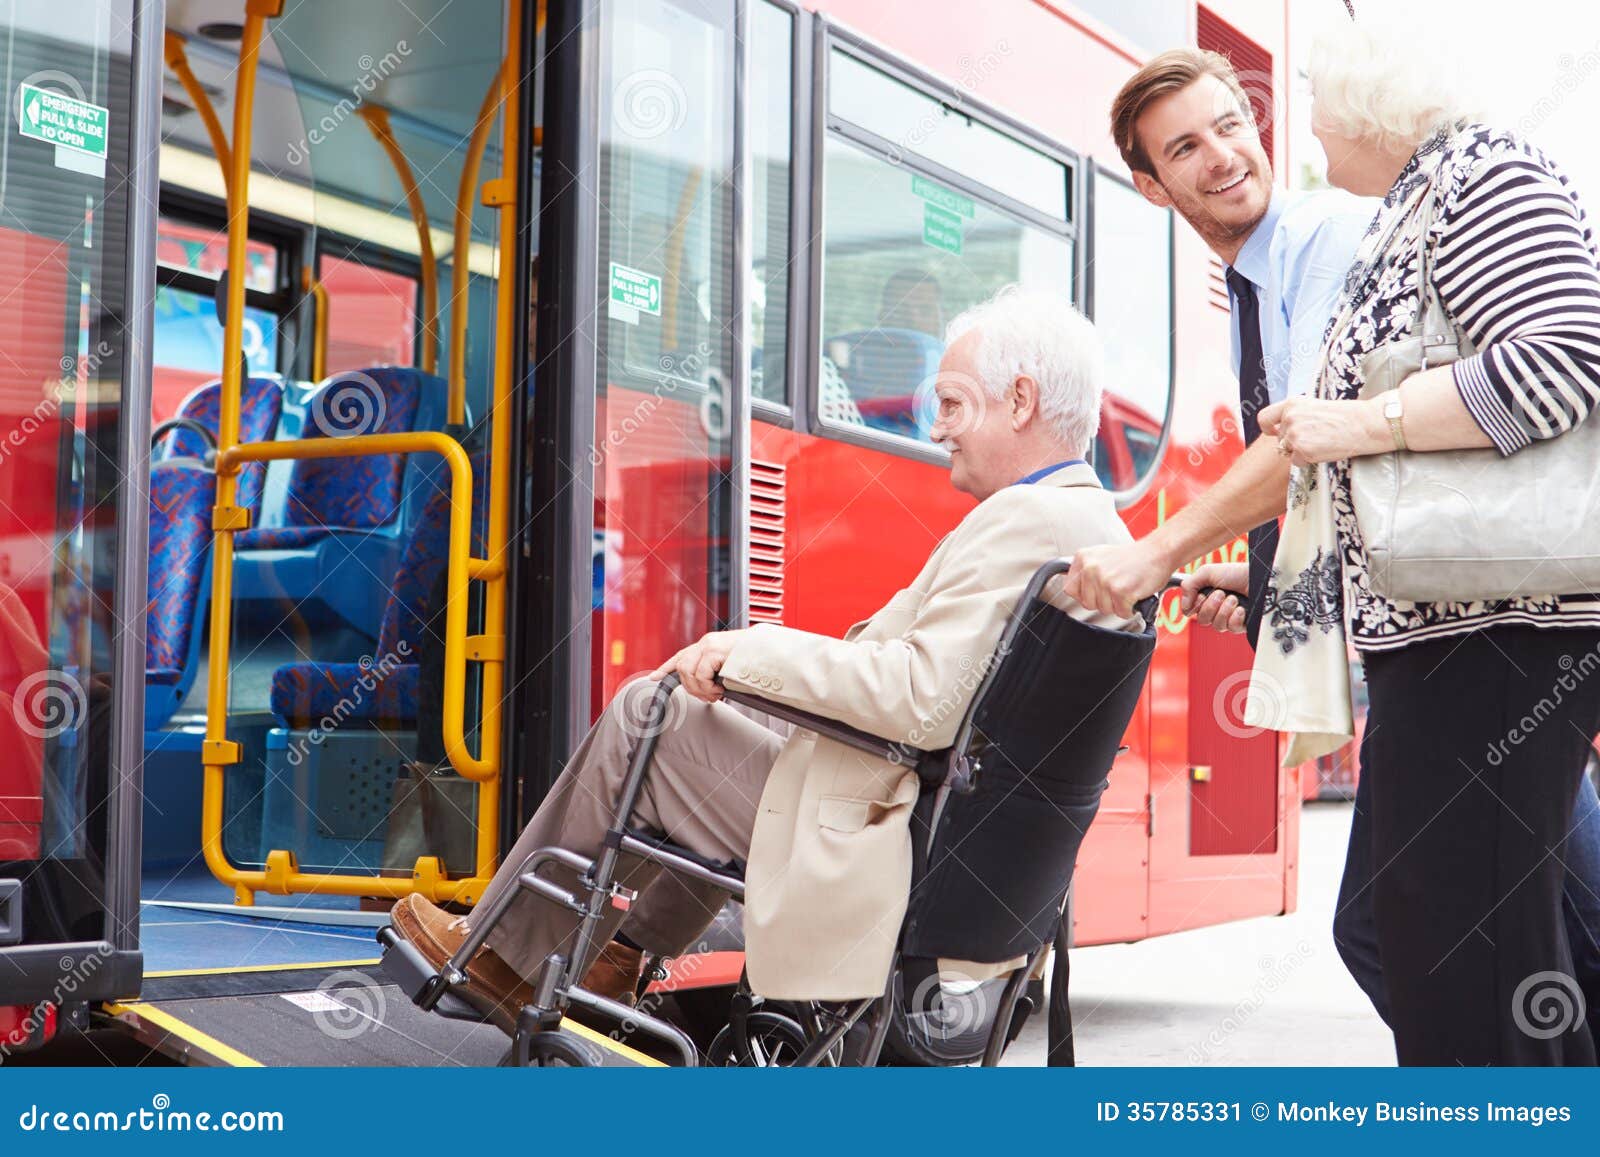 driver helping senior couple board bus via wheelchair ramp